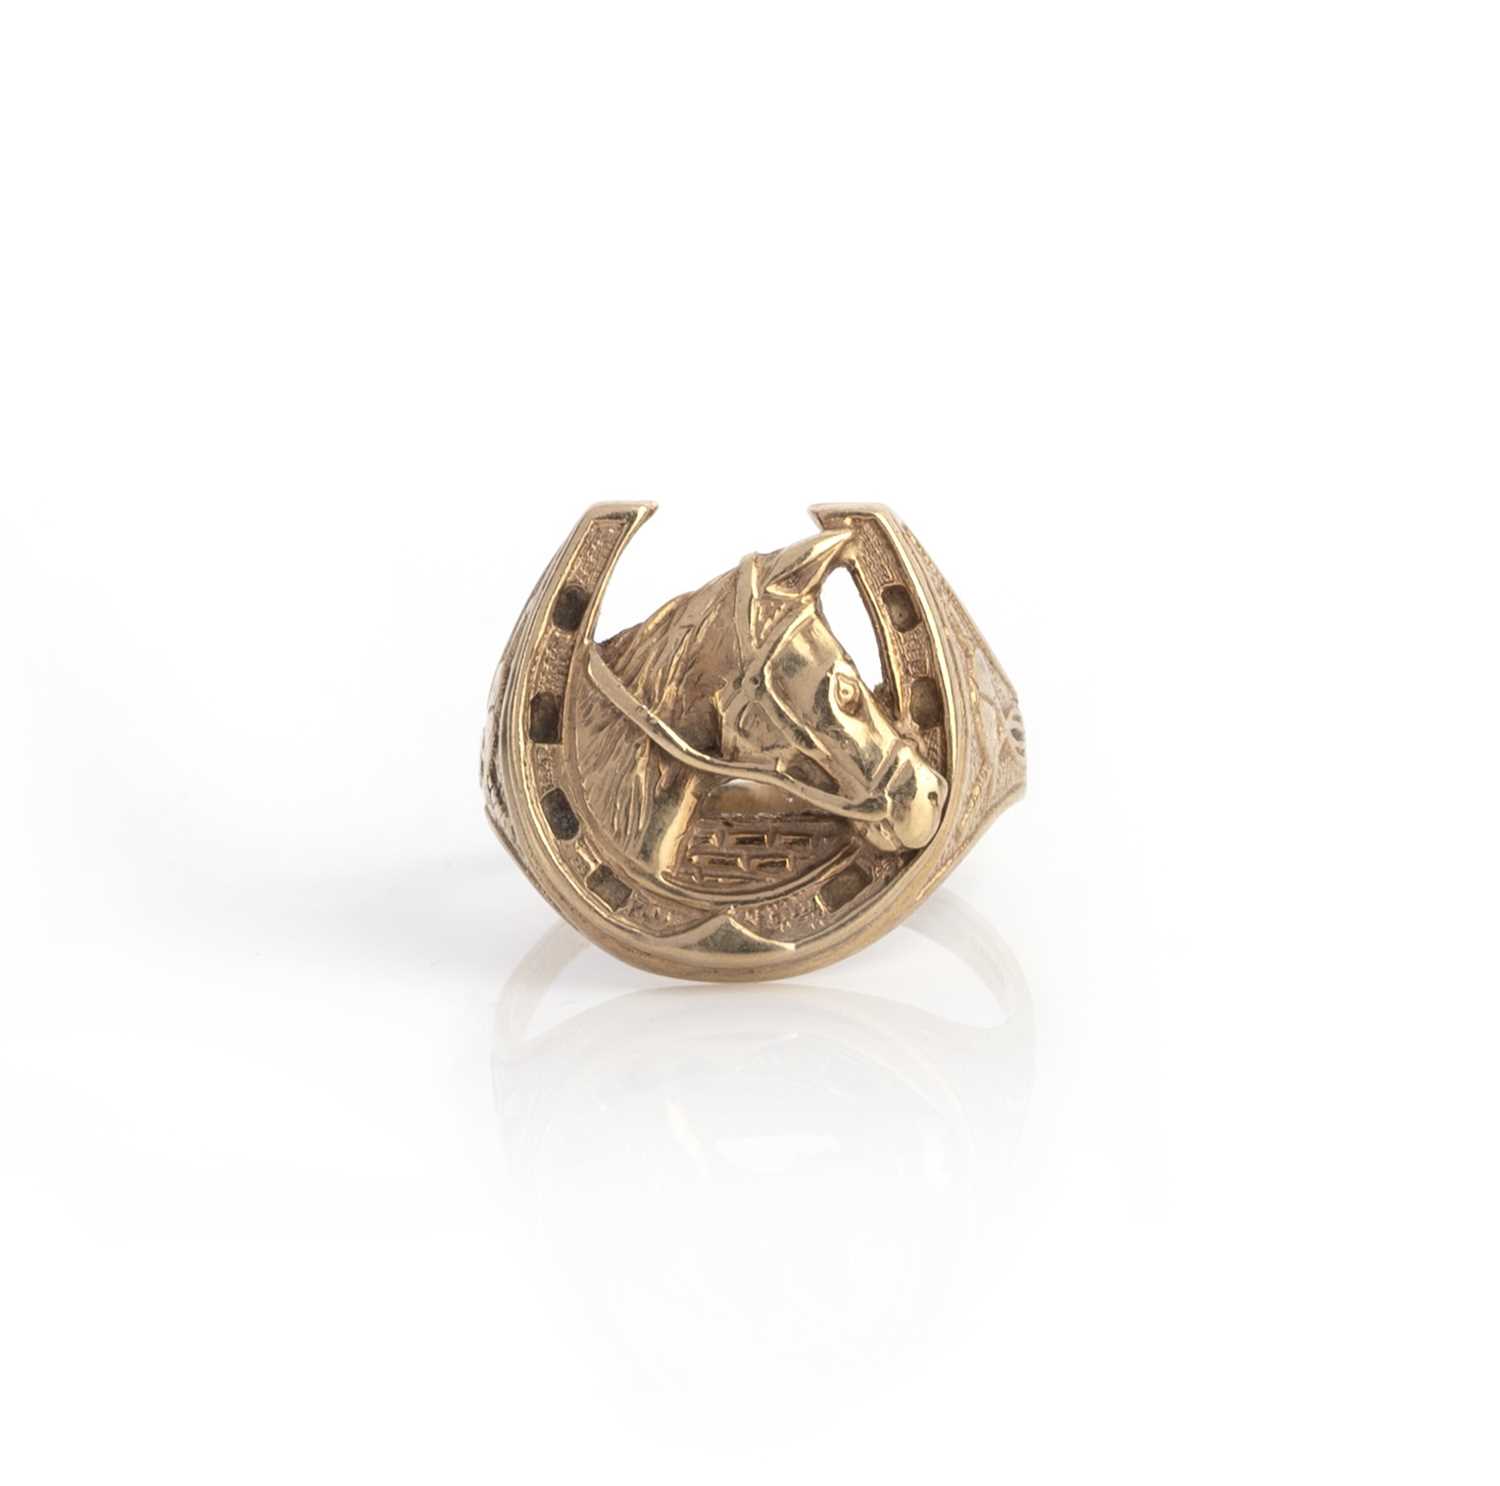 A gold ring, of horseshoe design, hallmarked for 9ct gold London 1994, sponsor I & BJ, size Z